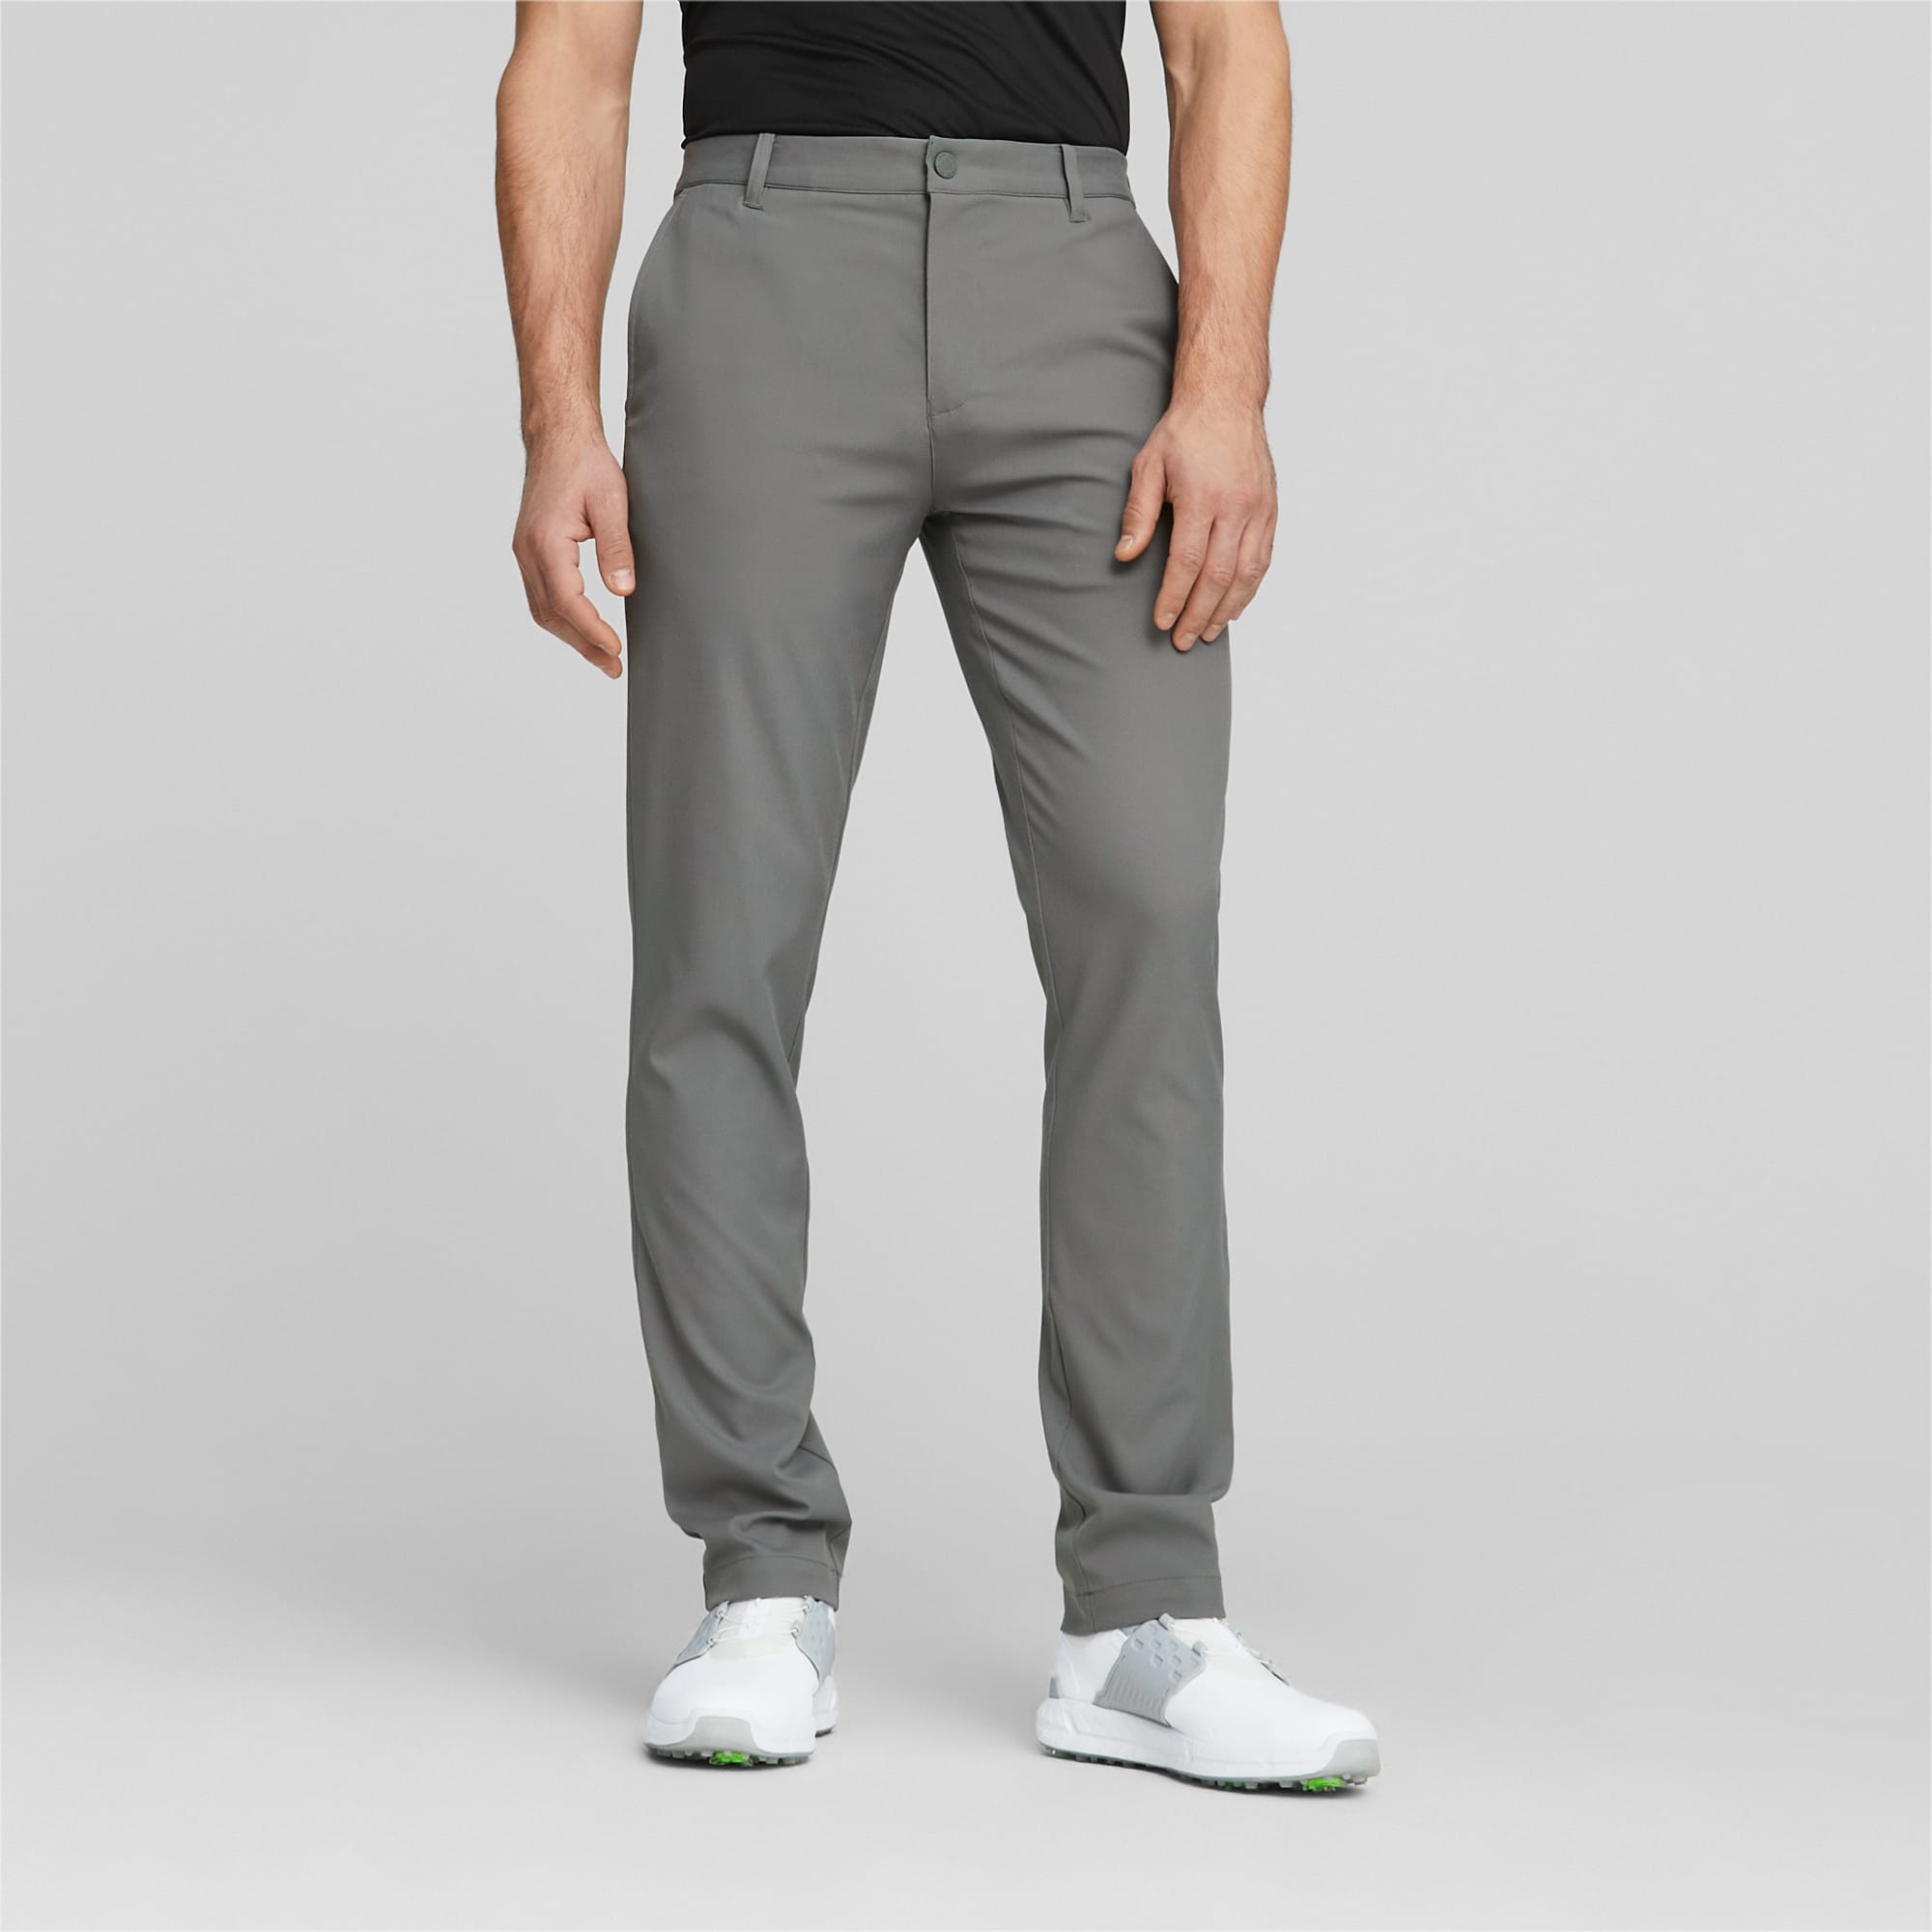 PUMA Dealer Tailored Golf Pants Men, Slate Sky, Size 33/36, Clothing